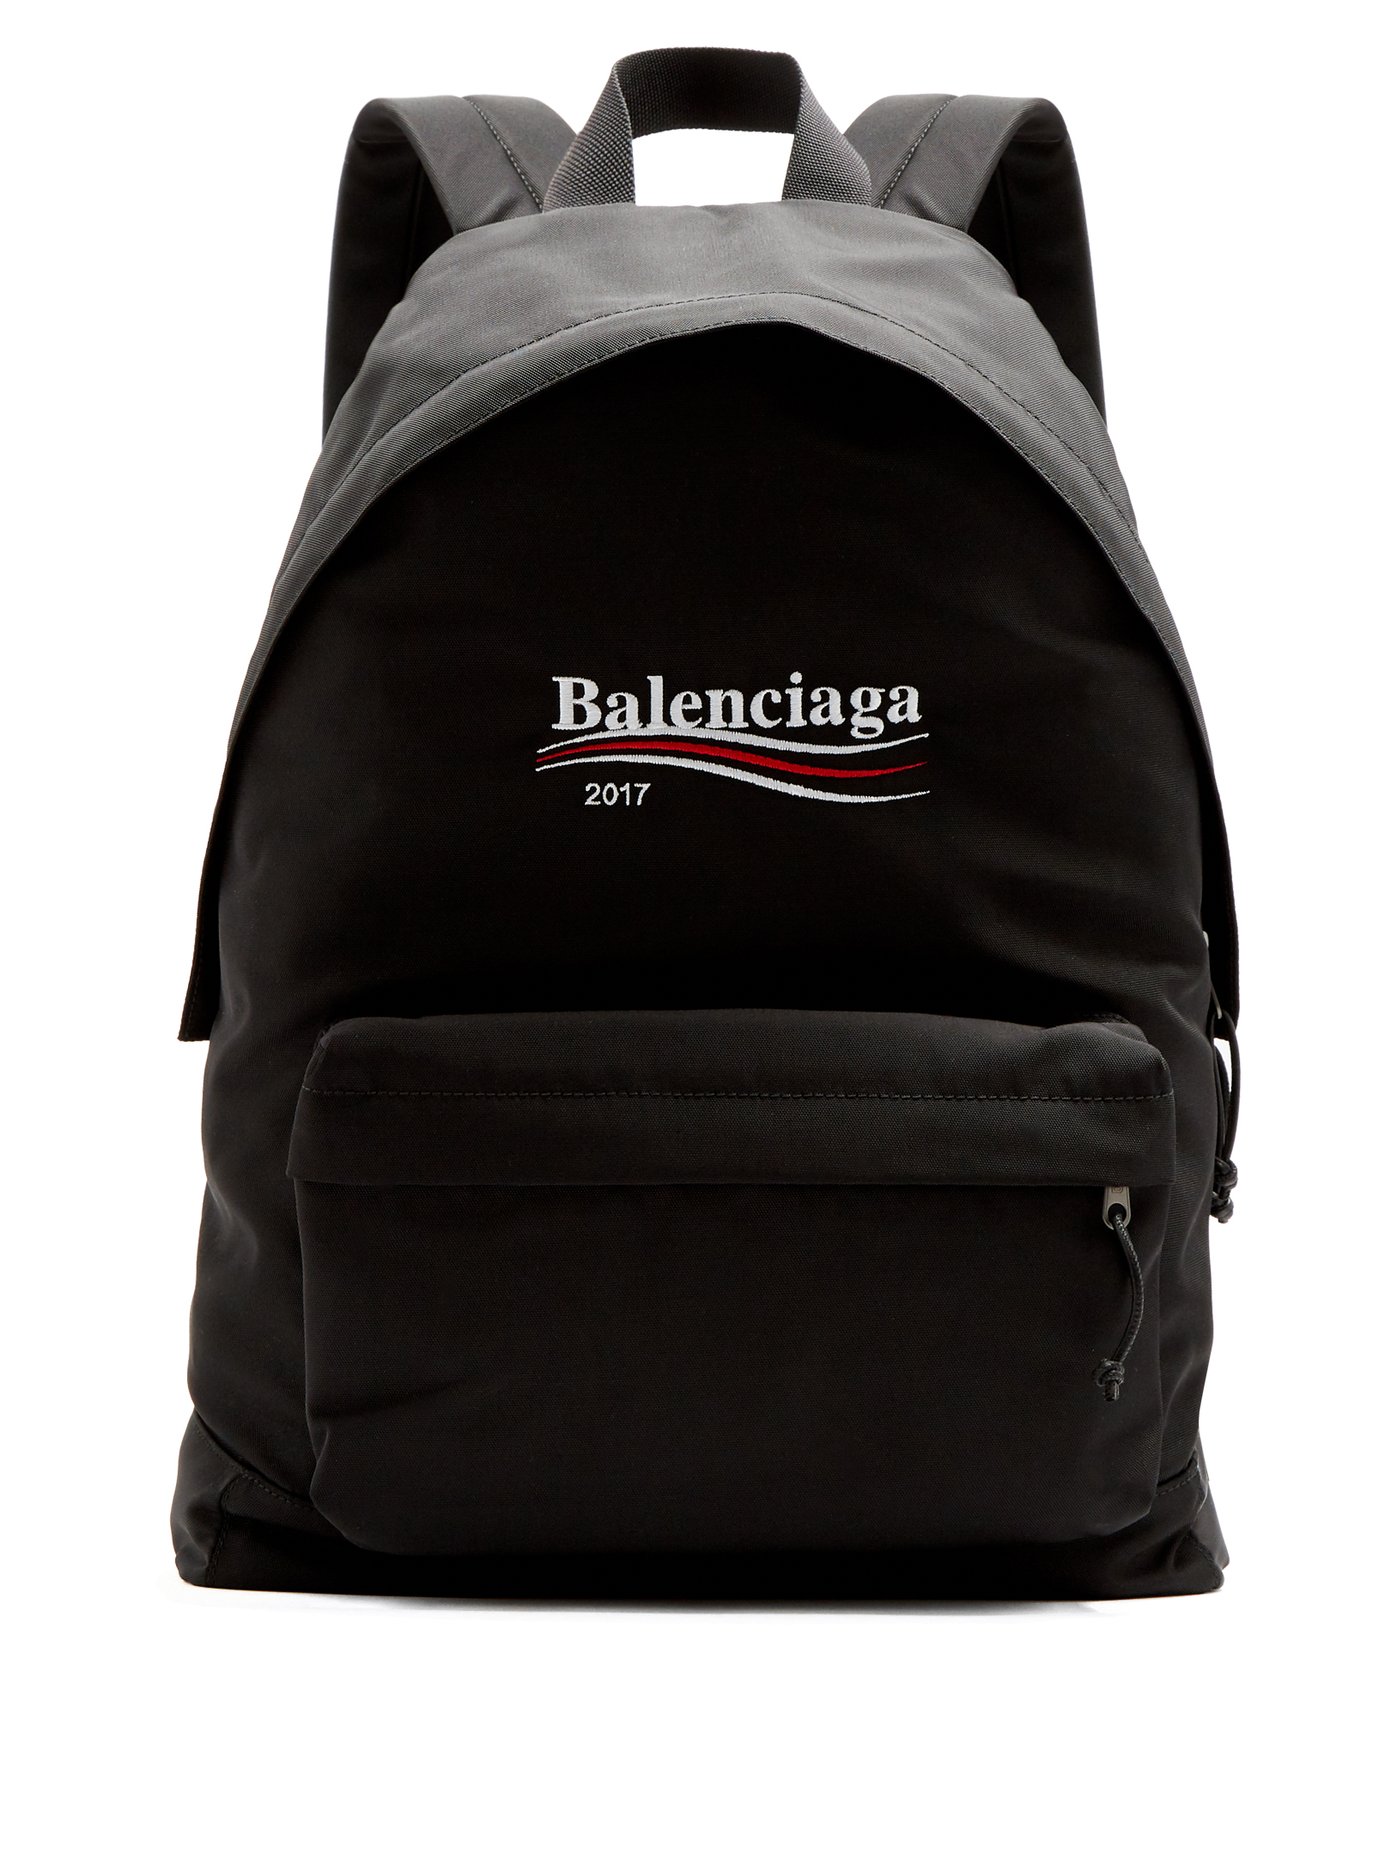 balenciaga 2017 backpack